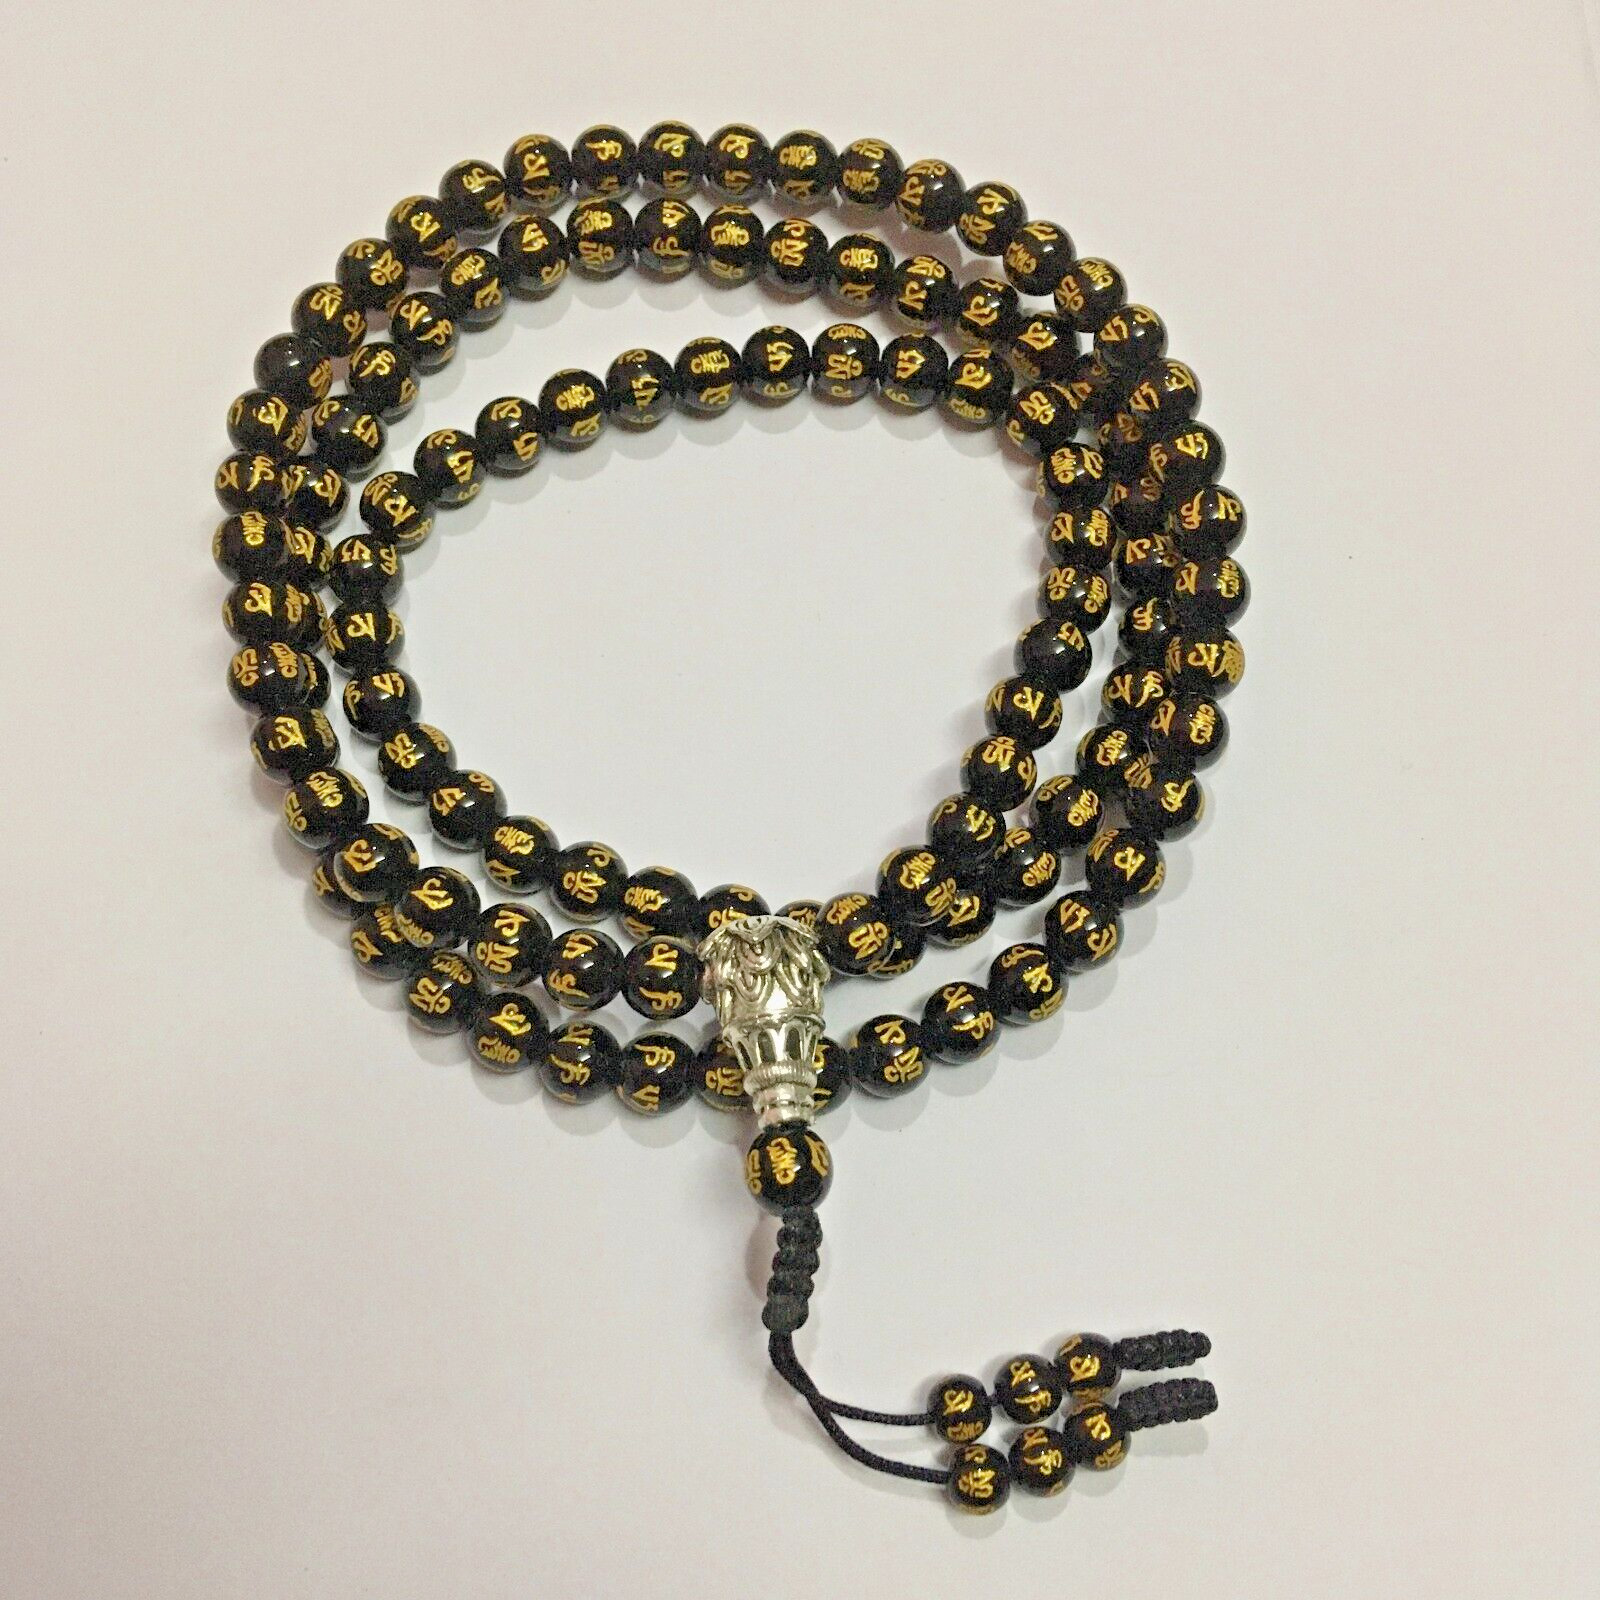 Om Mani Padme Hum Engraved Tibetan Buddhist Prayer Beads 108 Mala Necklace 8 MM